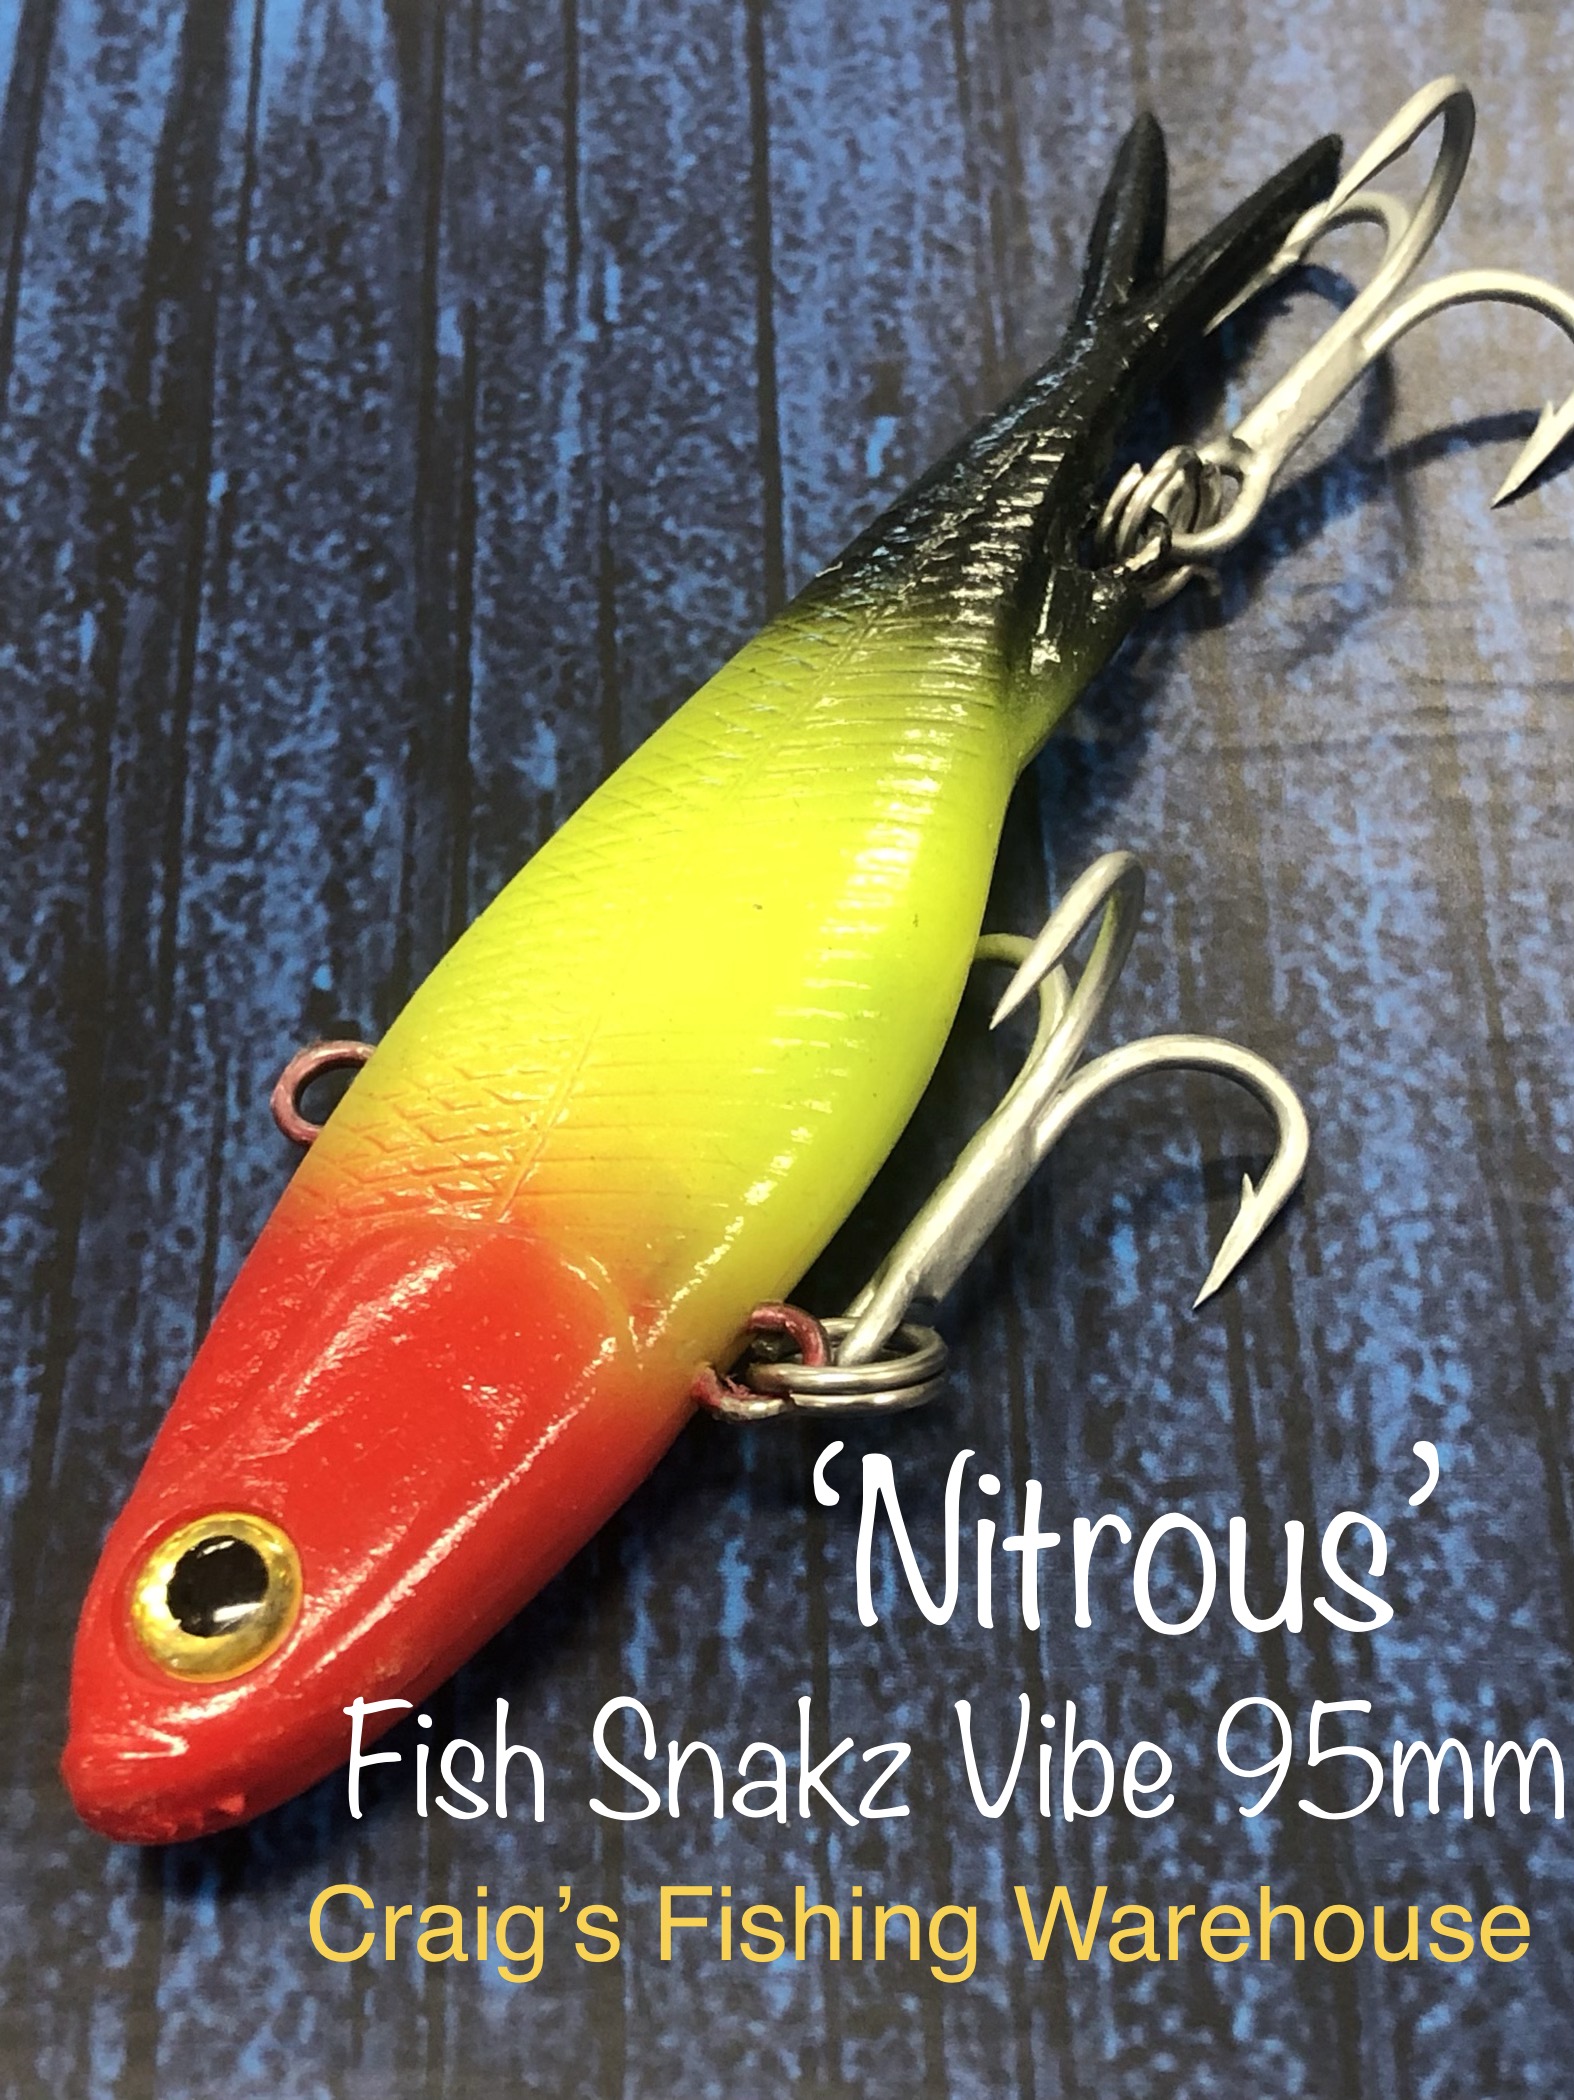 Reidy's Fish Snakz Vibe 95mm 'Nitrous